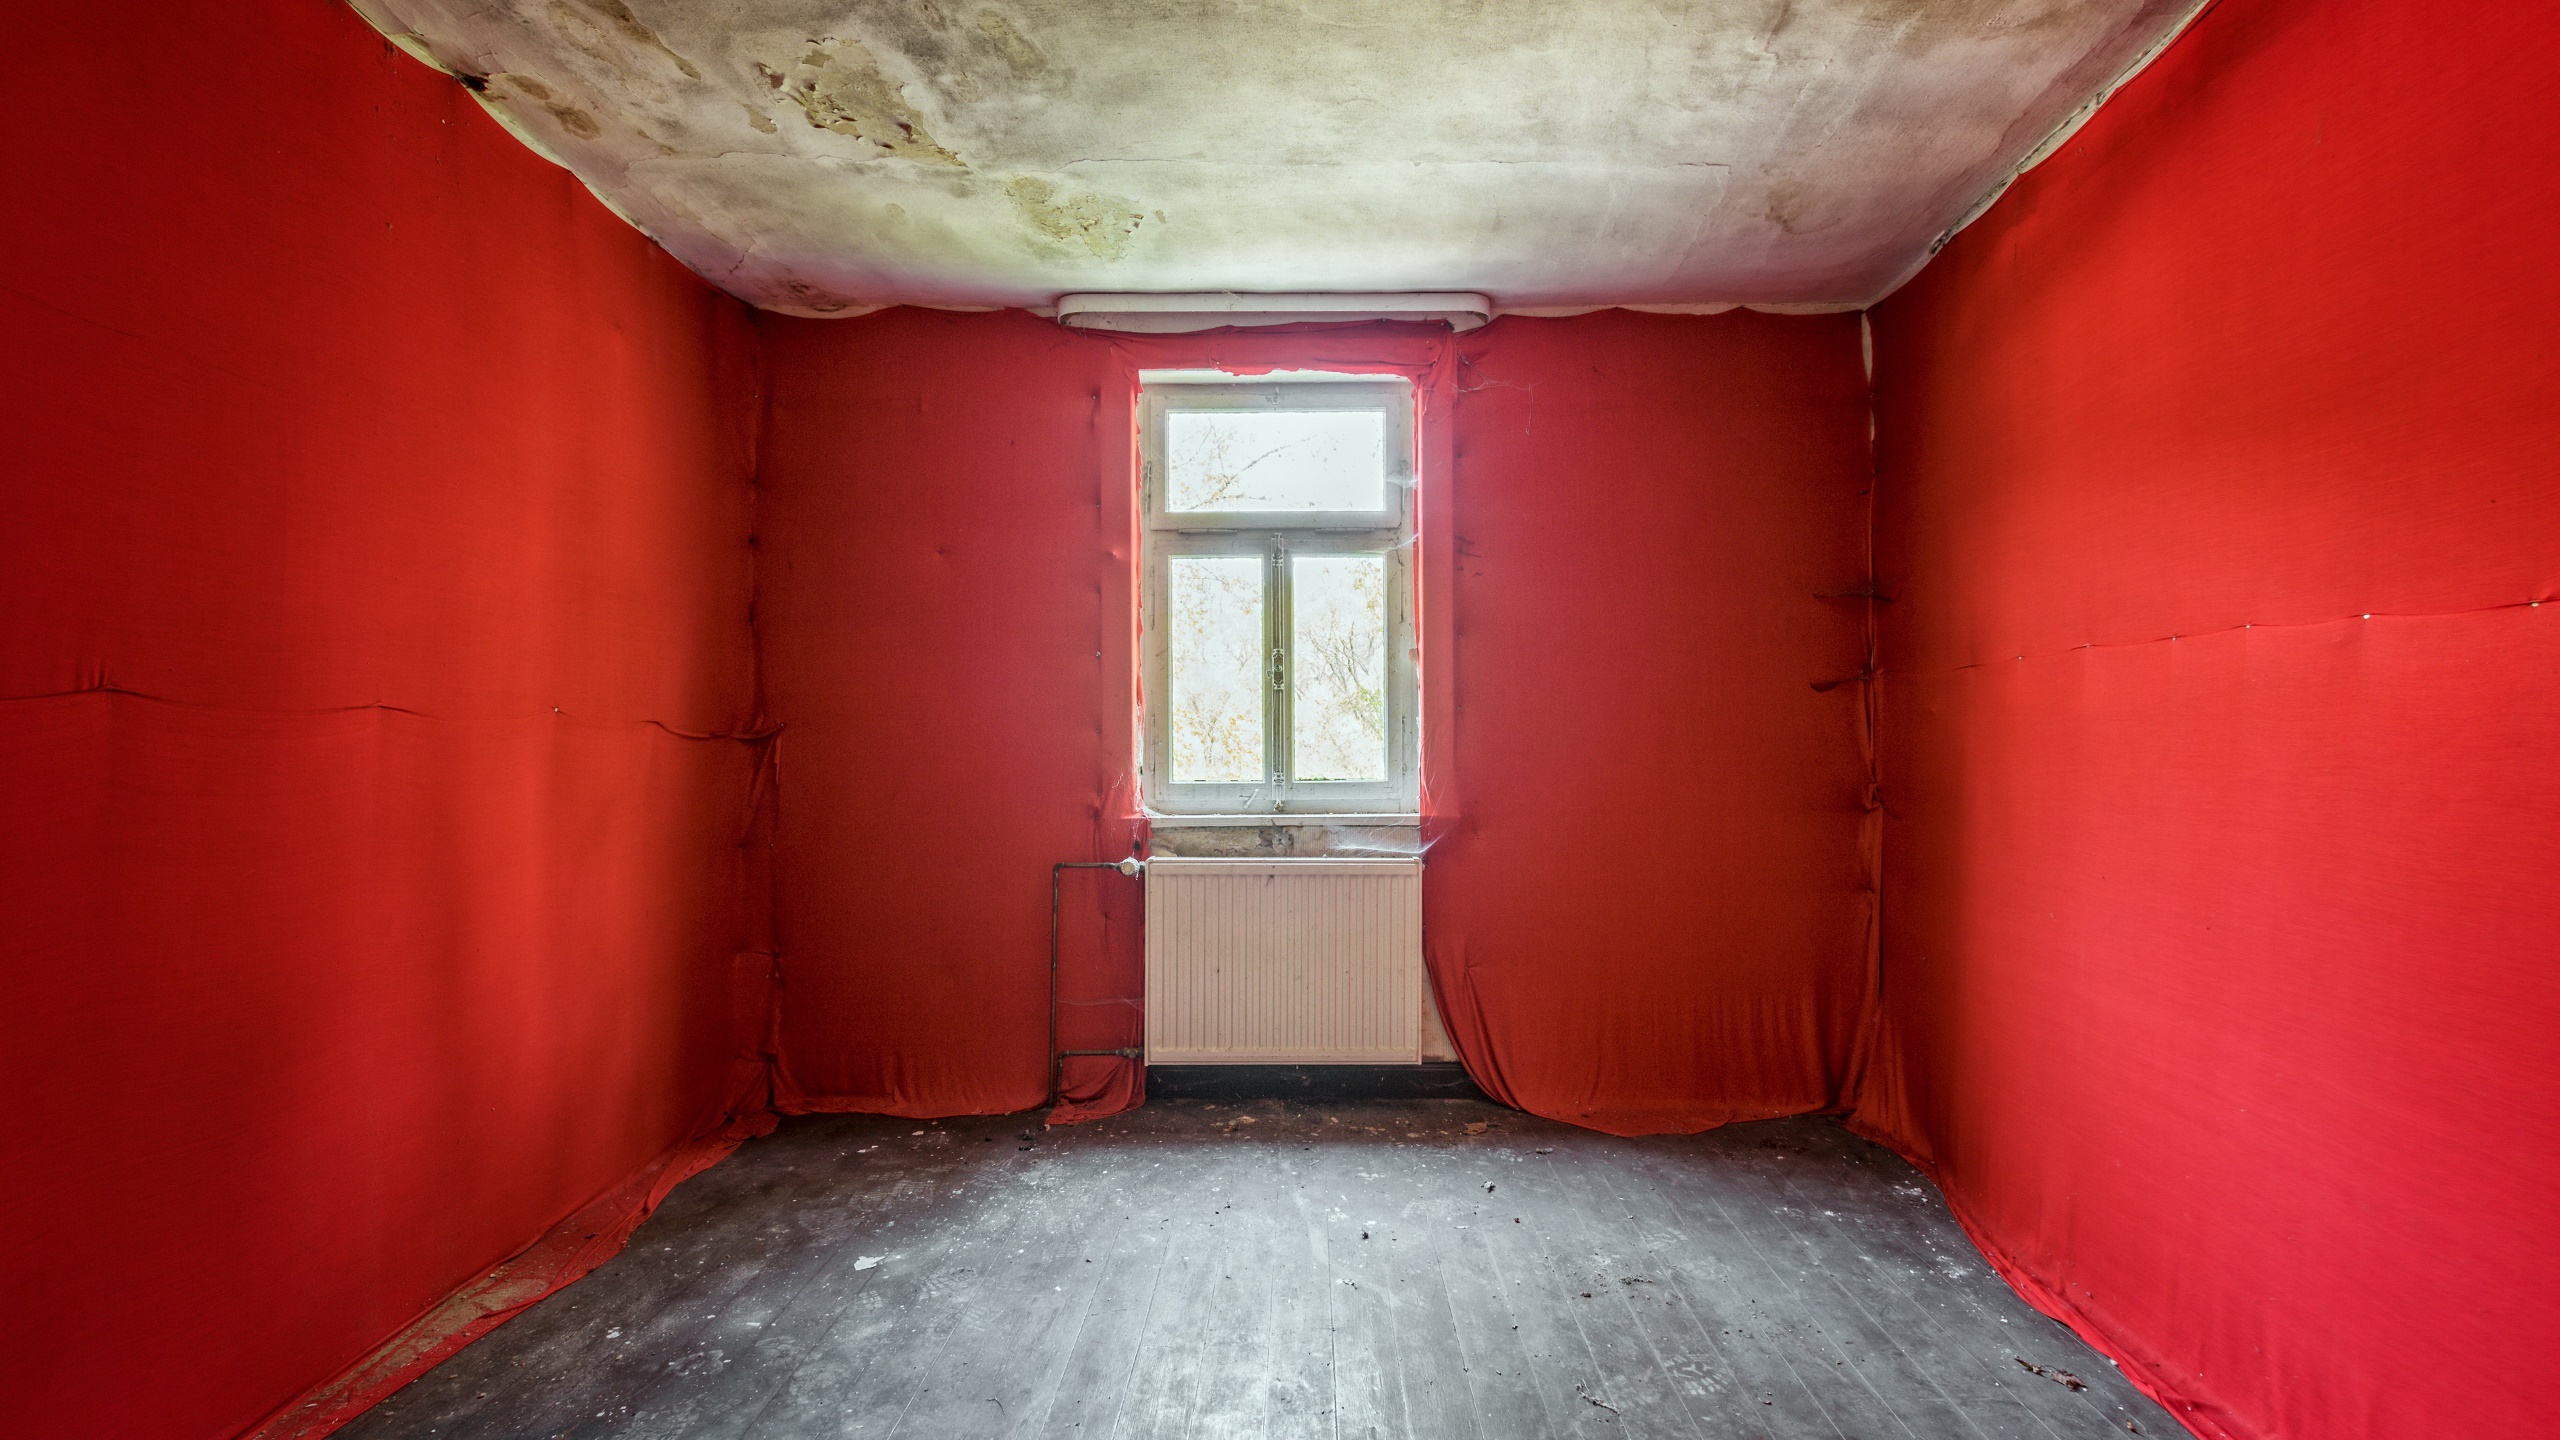 Indoors Room Red Empty Window Radiator 2560x1440